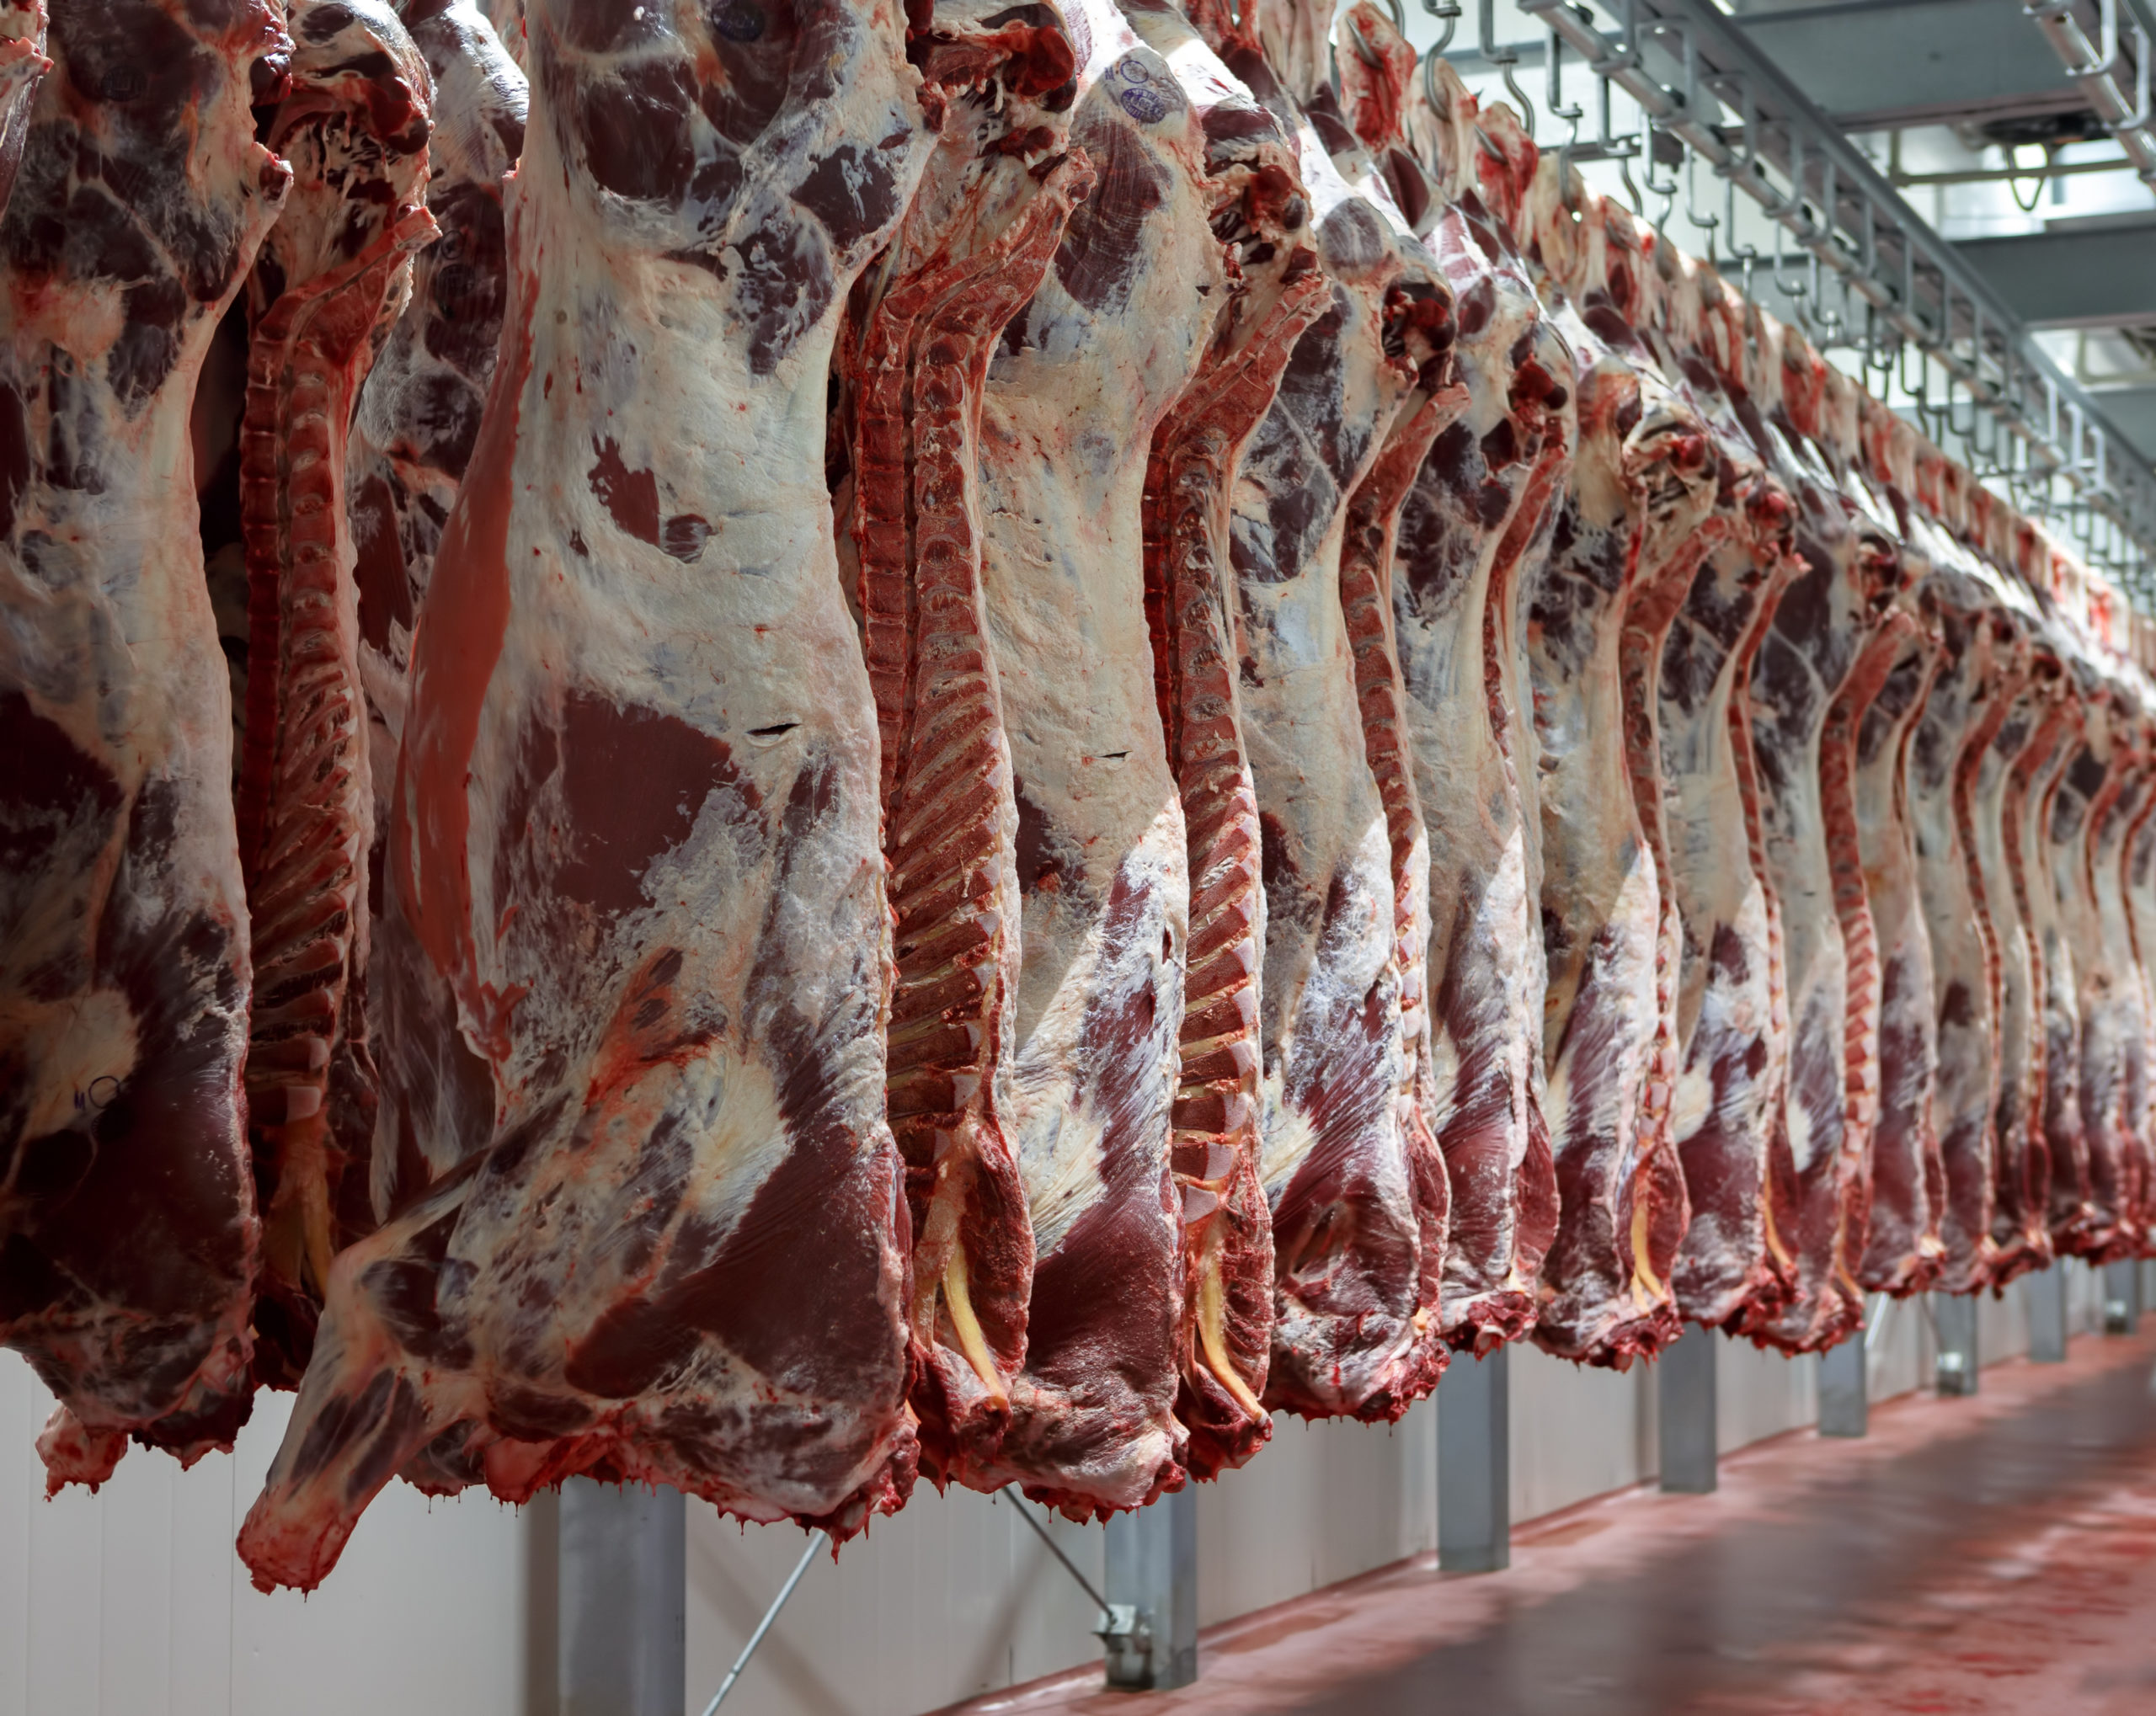 Meat carcasses - Bovine TB